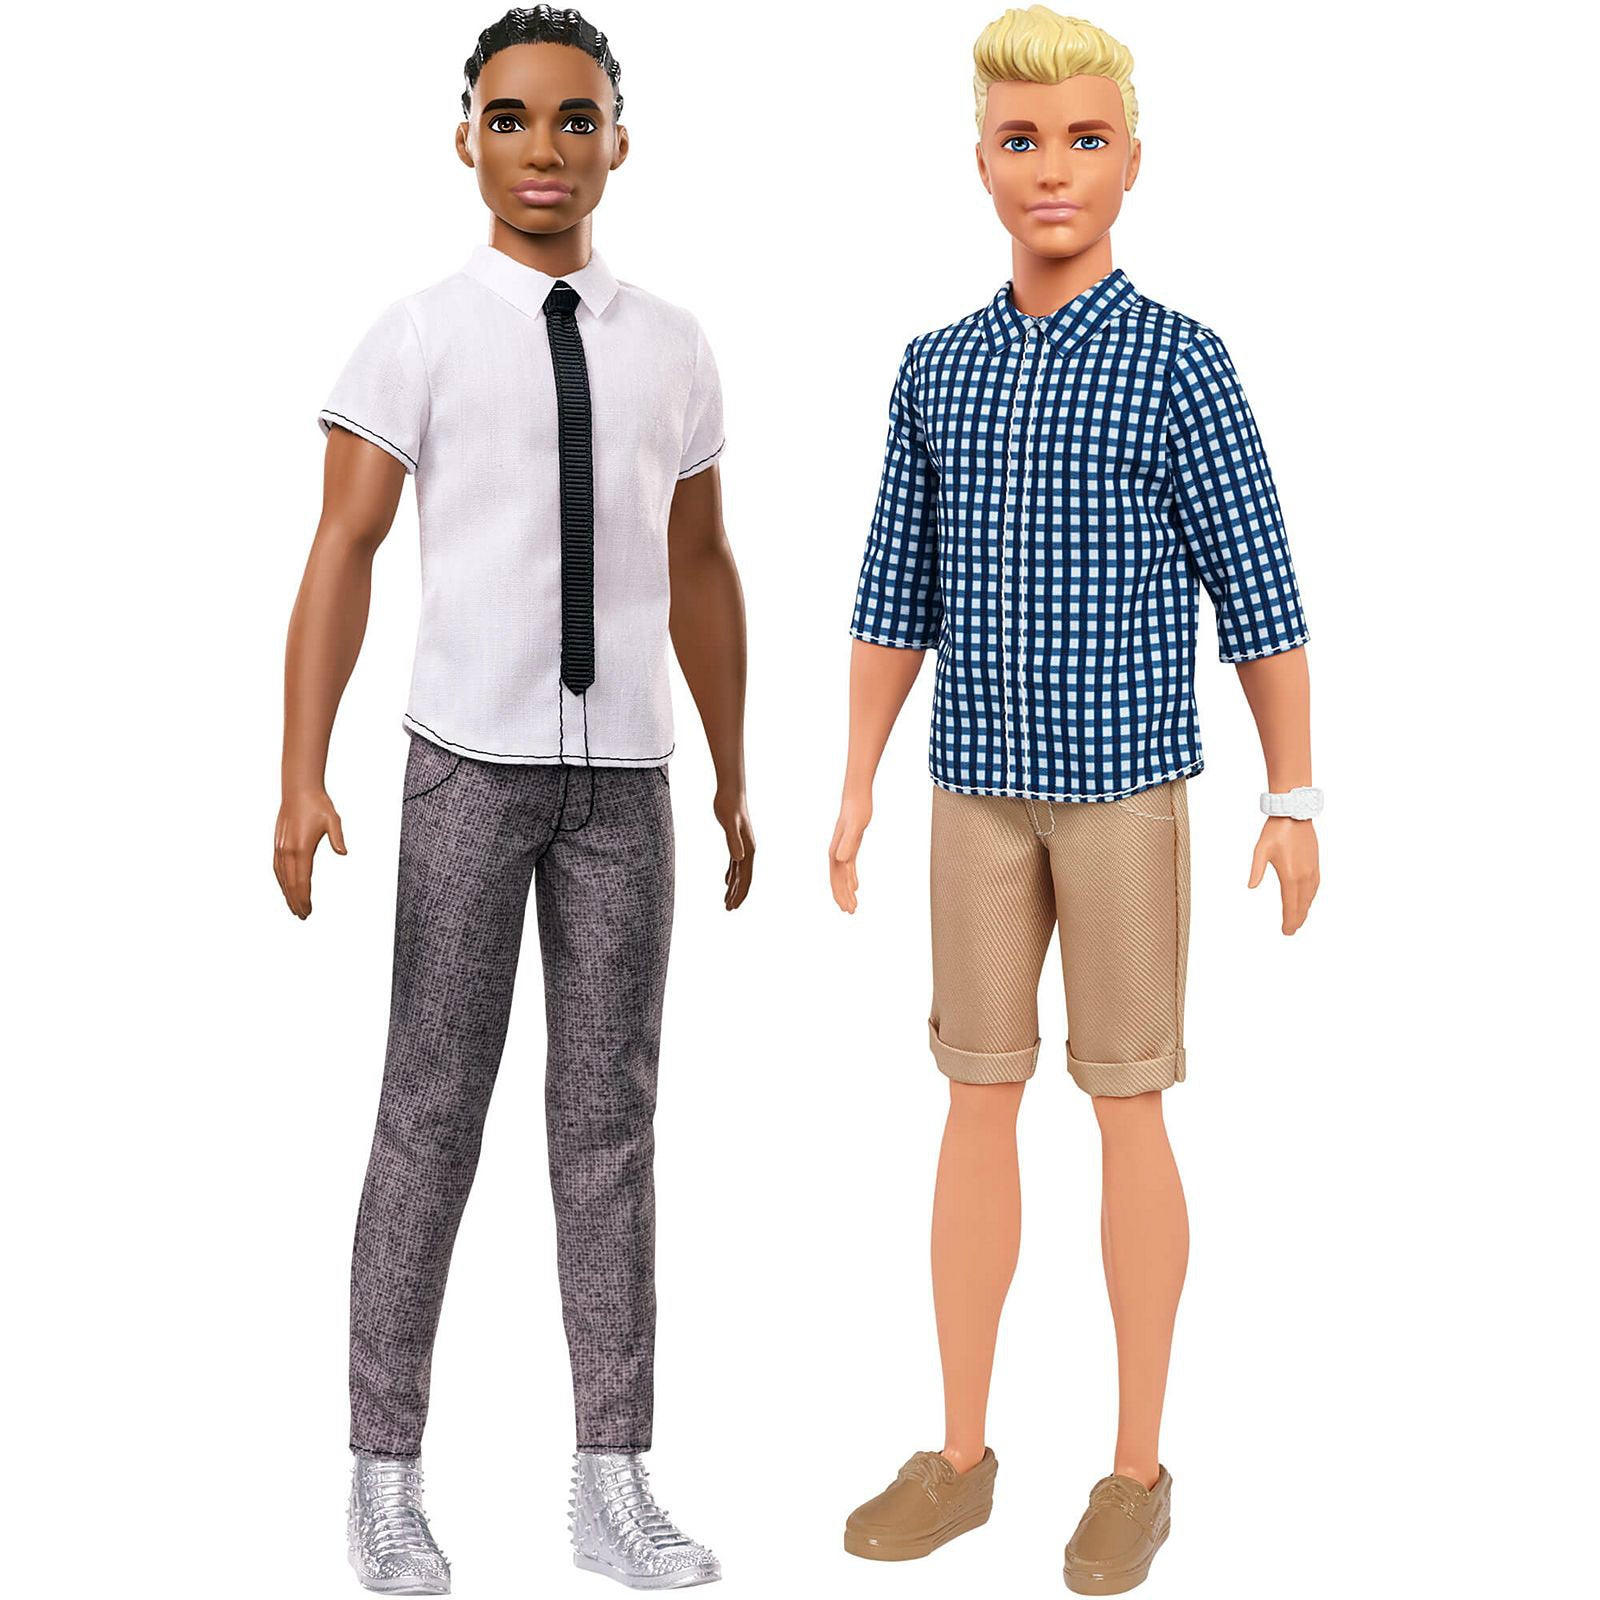 Mattel Introduces New Diverse Ken Dolls; Hopes To Reverse Sales